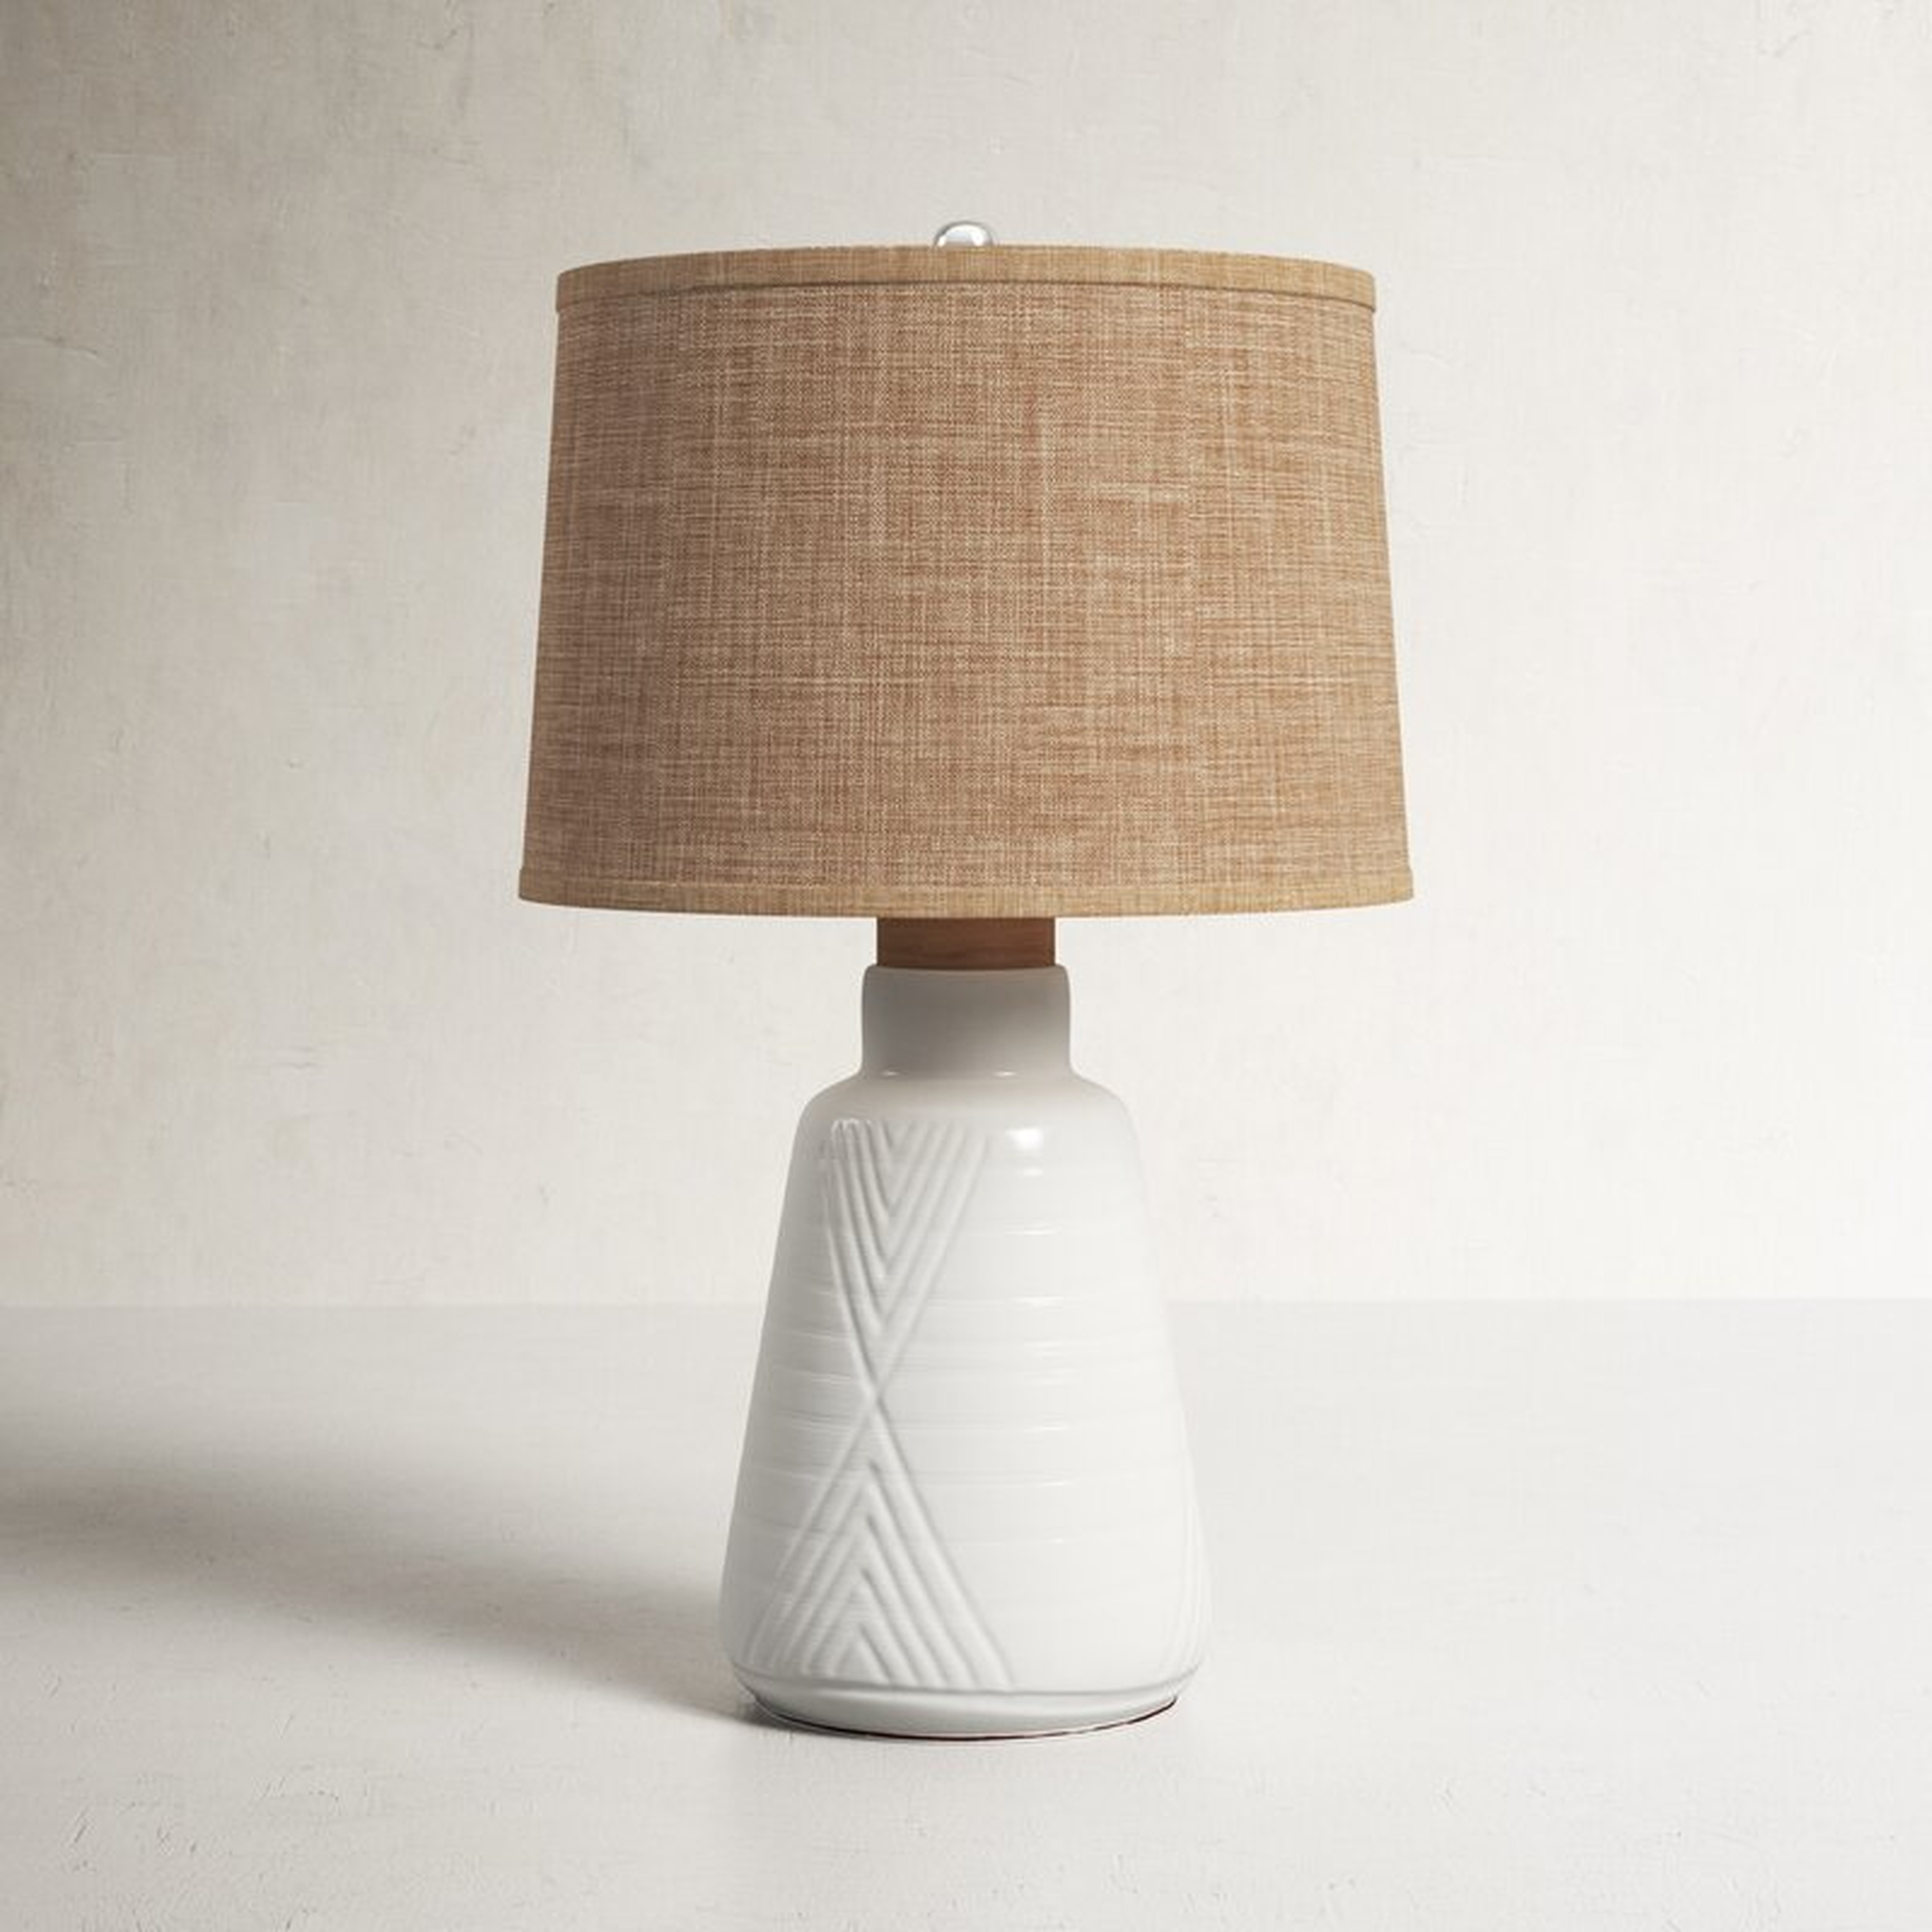 Galilea Textured Ceramic Table Lamp - Birch Lane